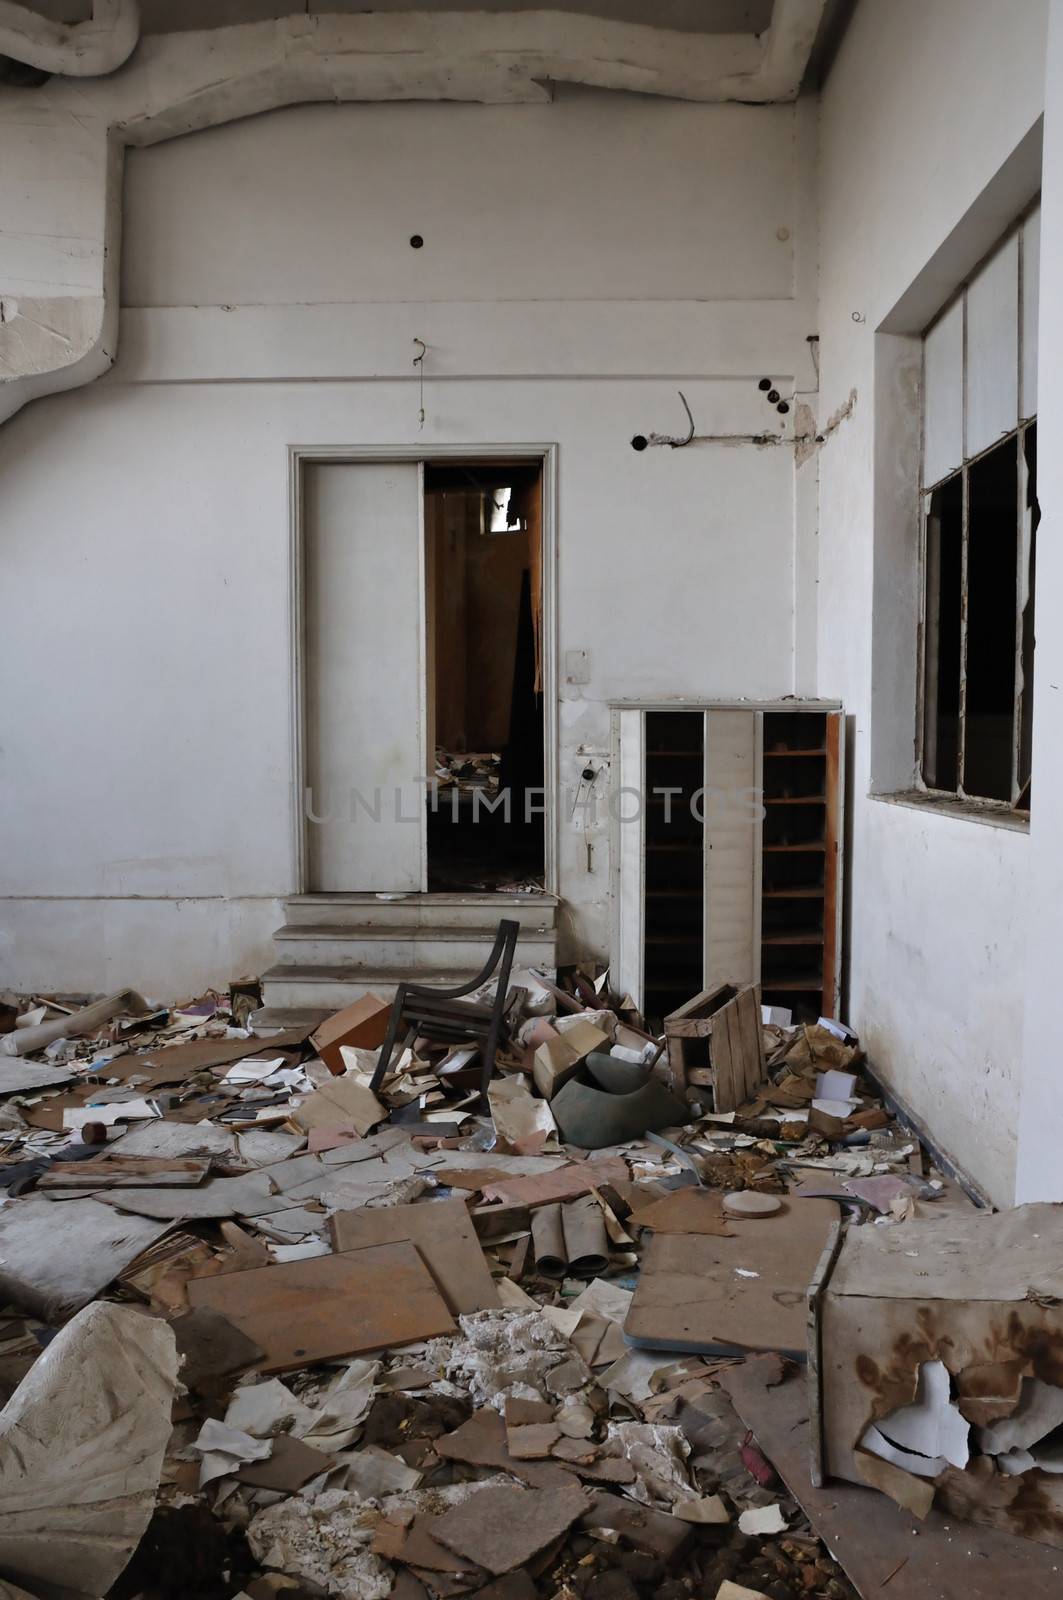 Vandalized room debris on the floor of abandoned building interior.